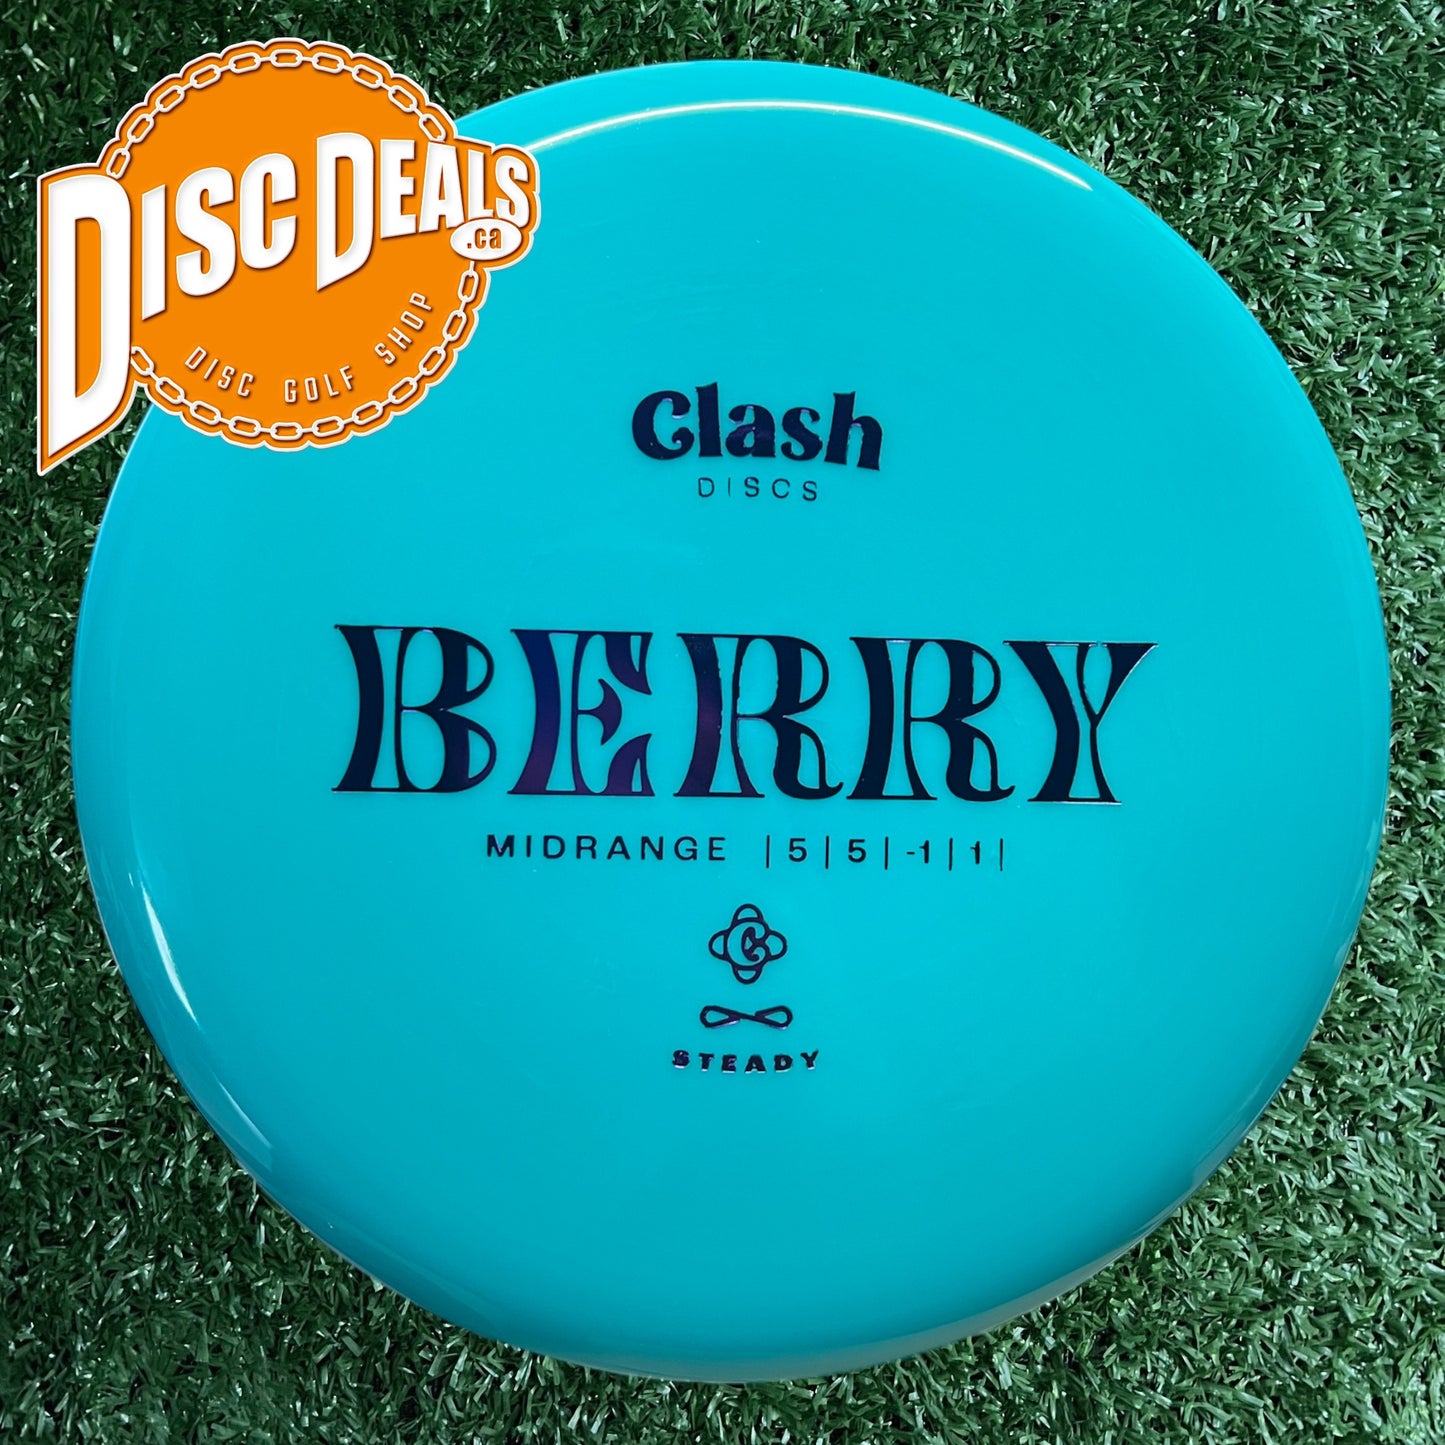 Clash Discs Berry - Steady